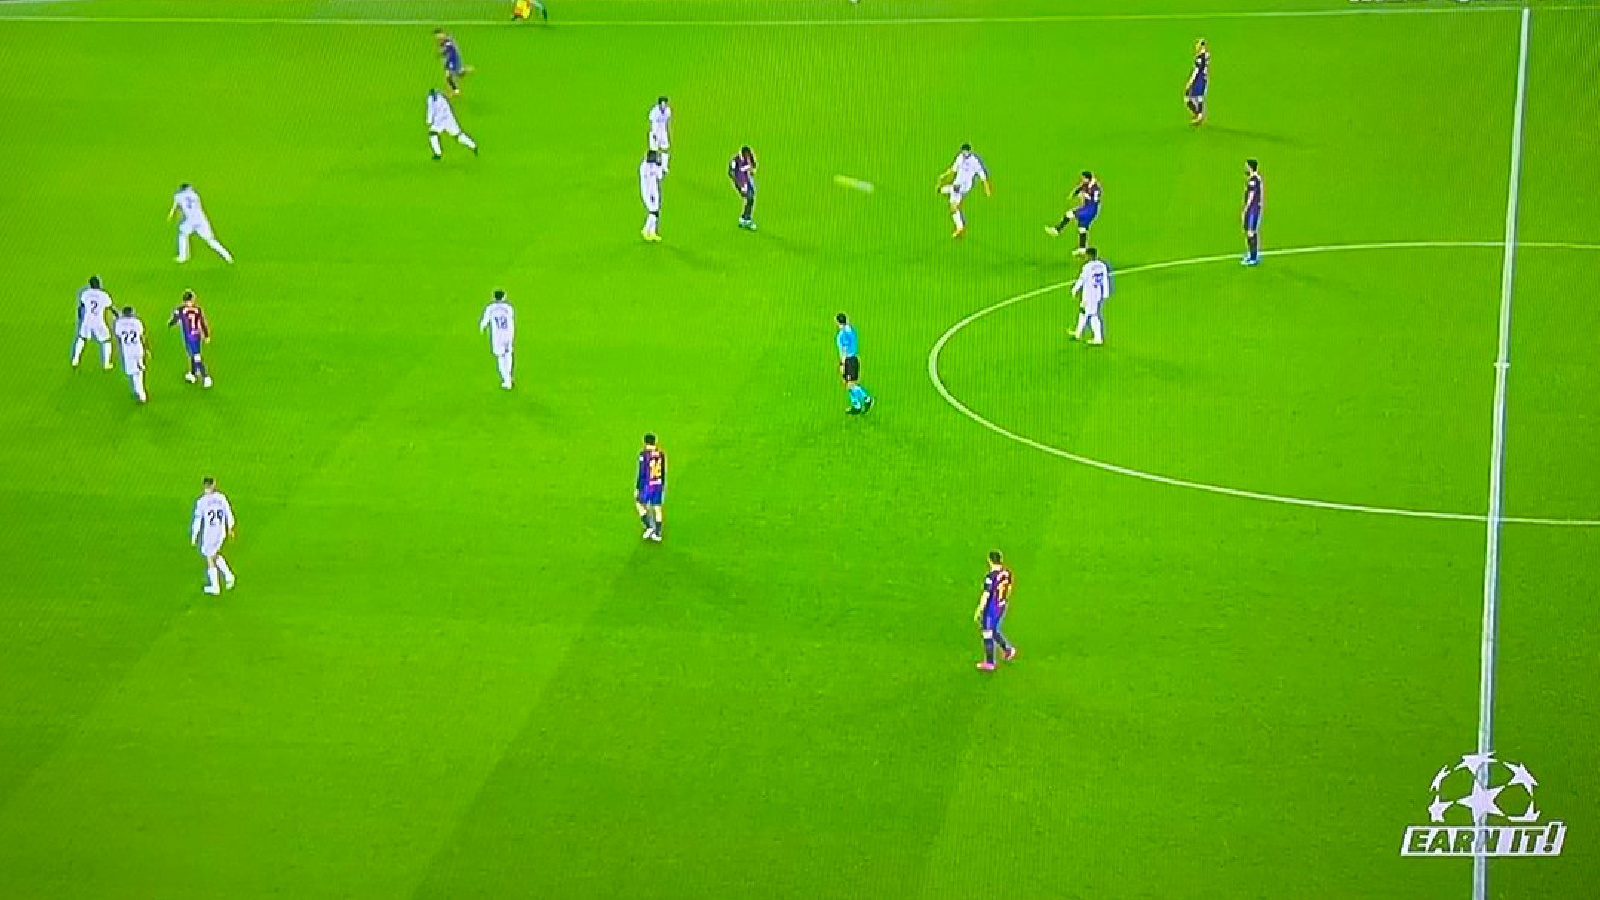 La Liga stream matches with a 'Earn It' logo on bottom right corner